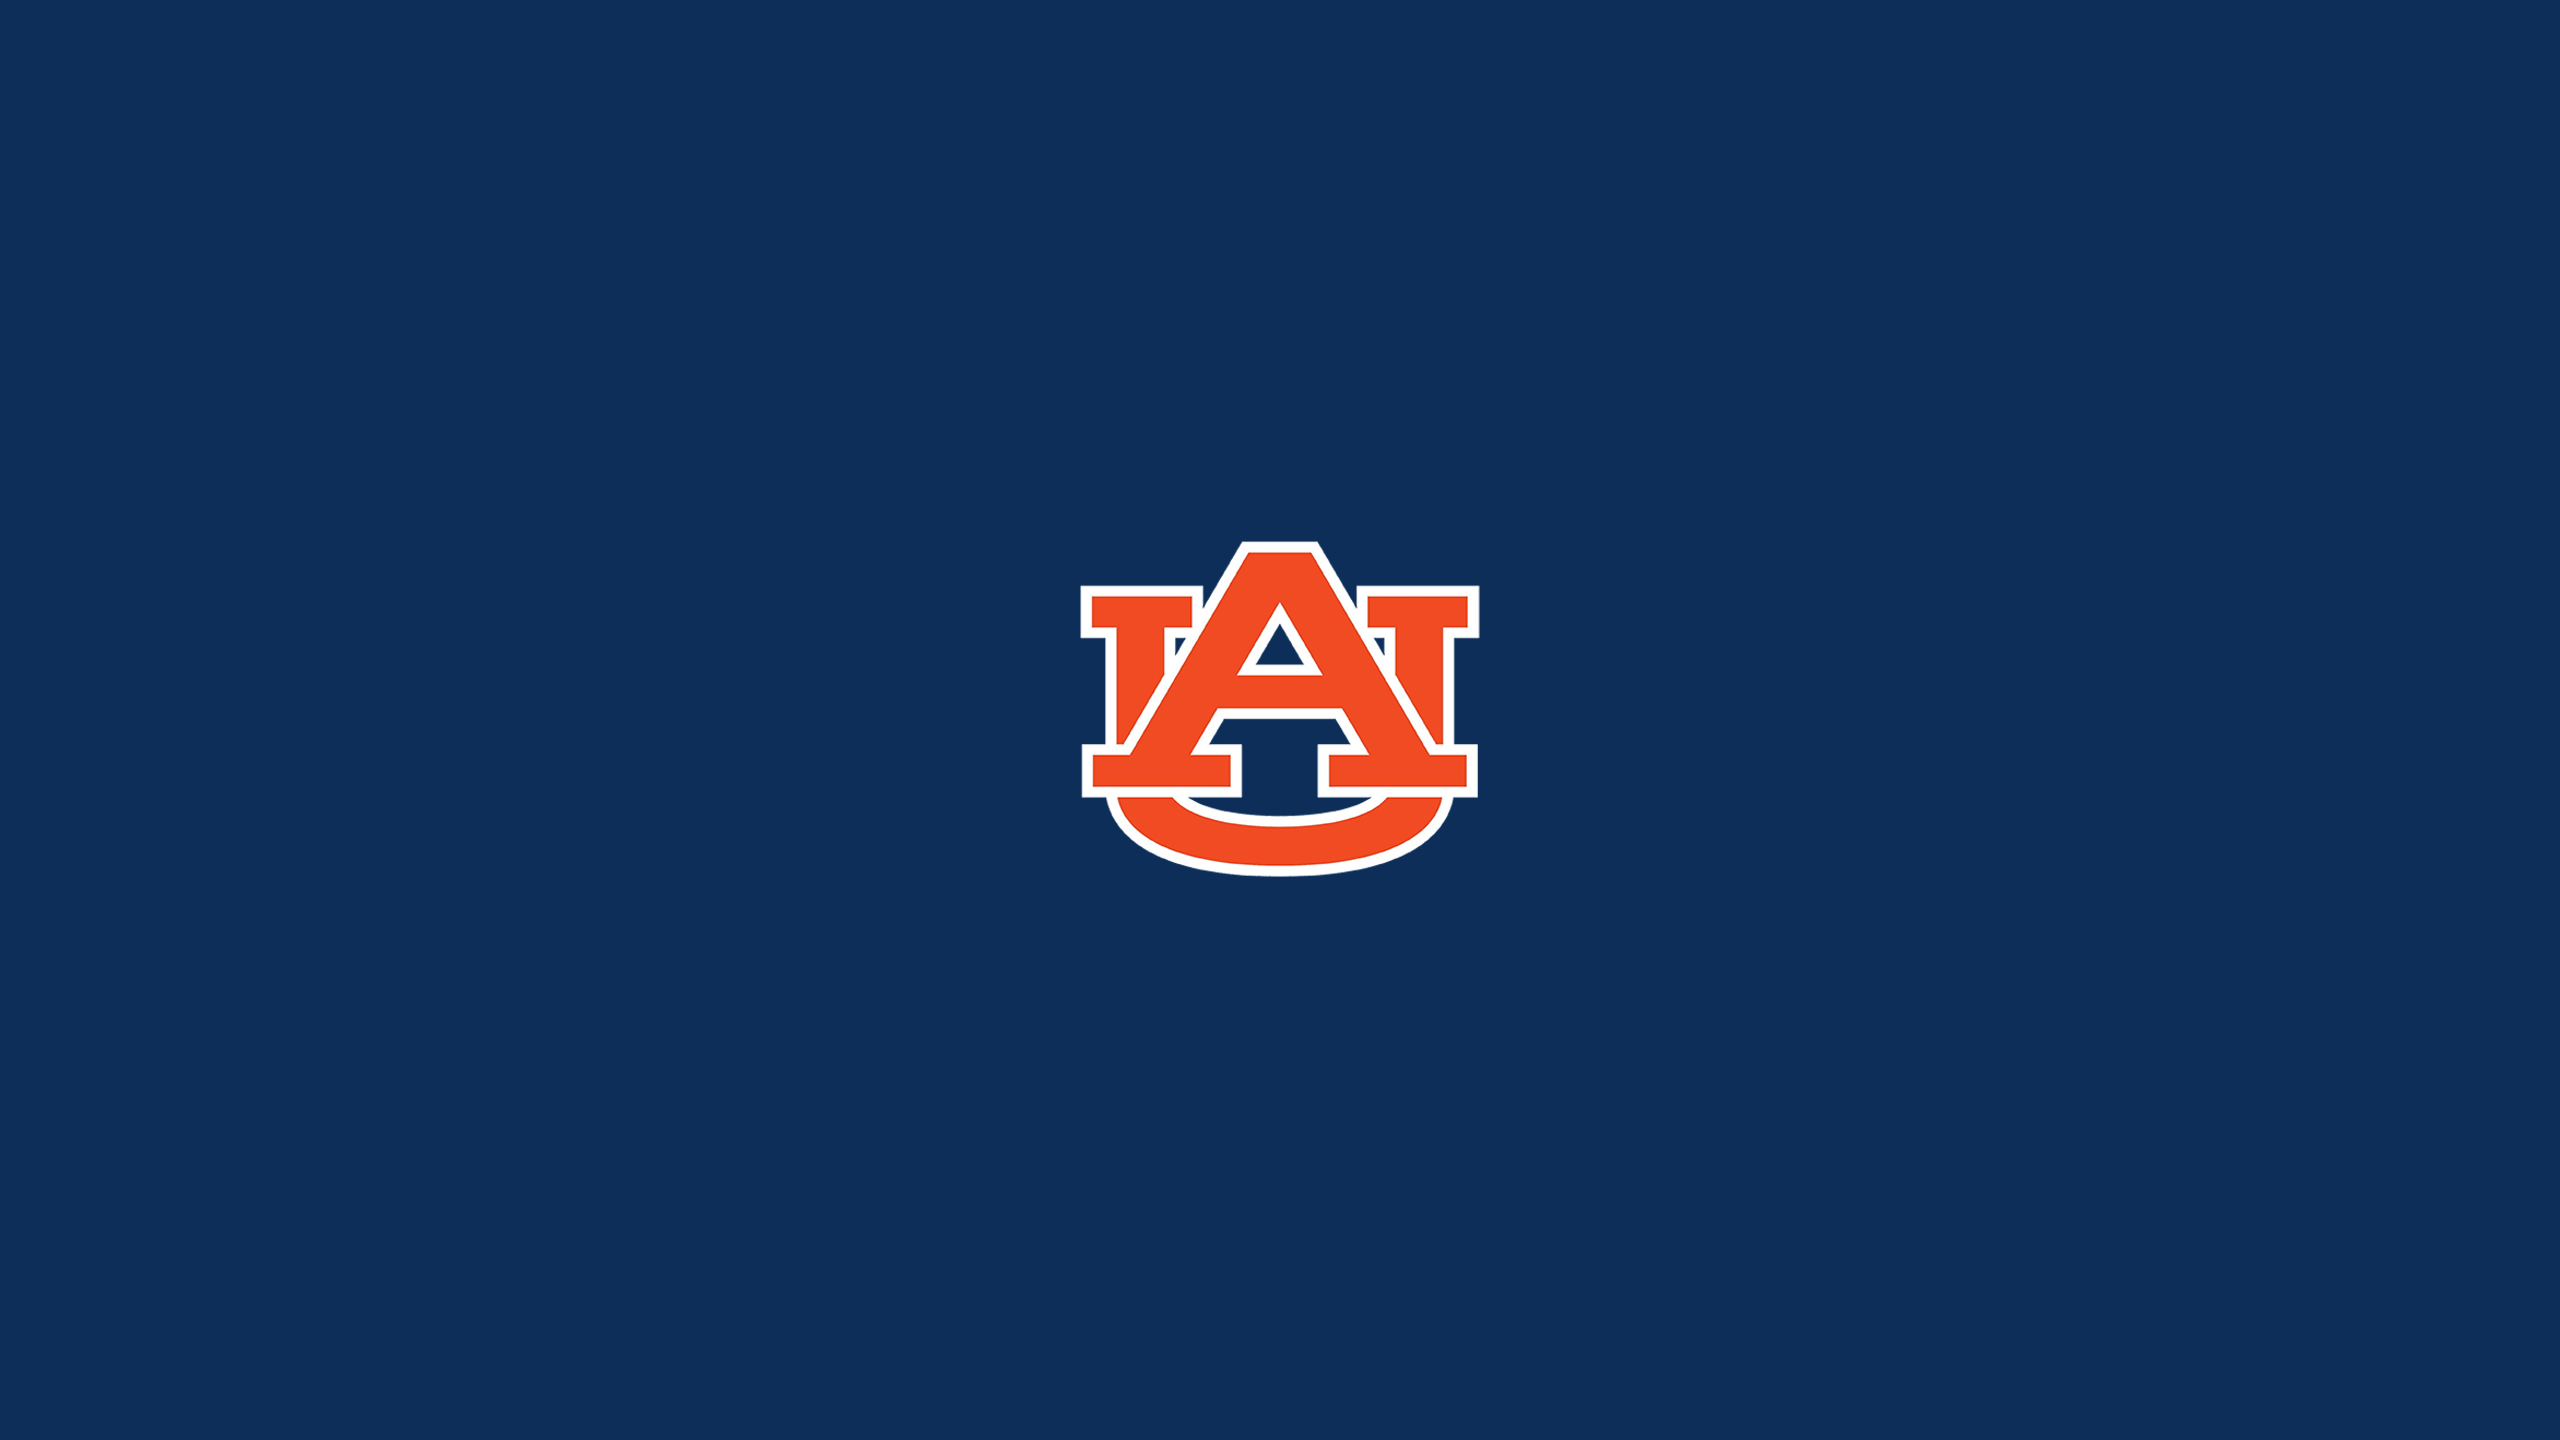 Auburn Tigers Football - NCAAF - Square Bettor